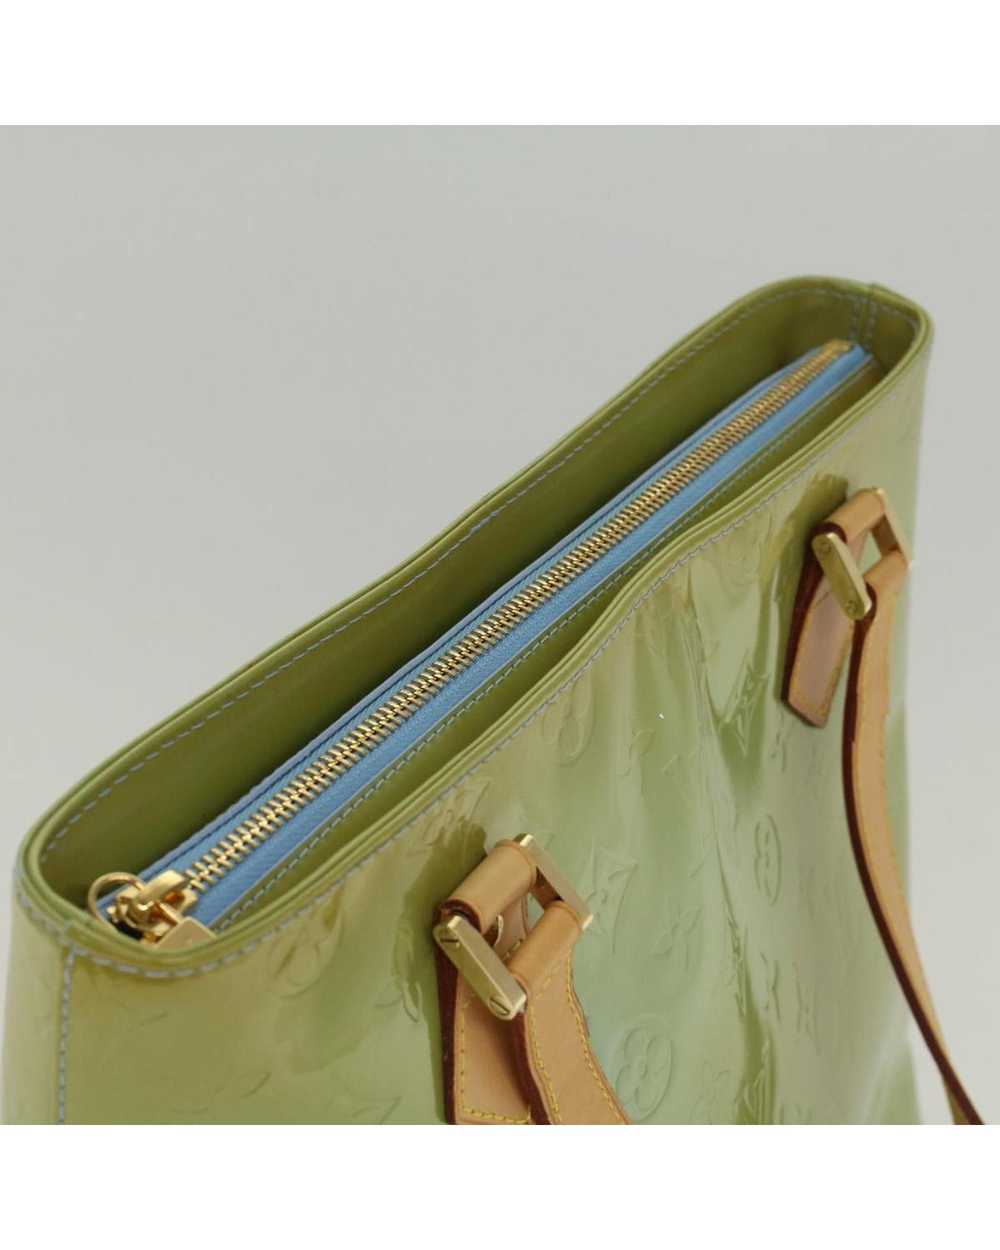 Louis Vuitton Green Patent Leather Handbag - image 6